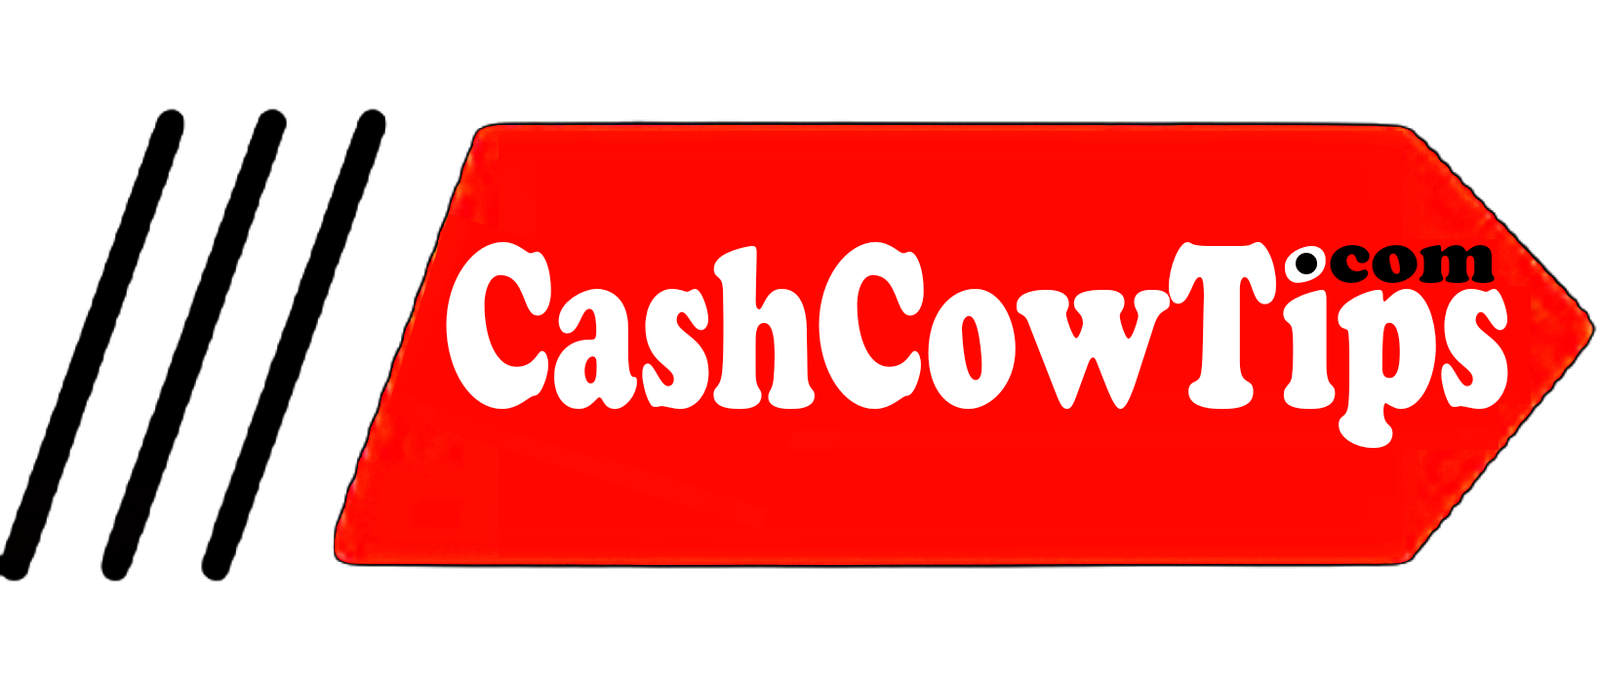 CashCowTips